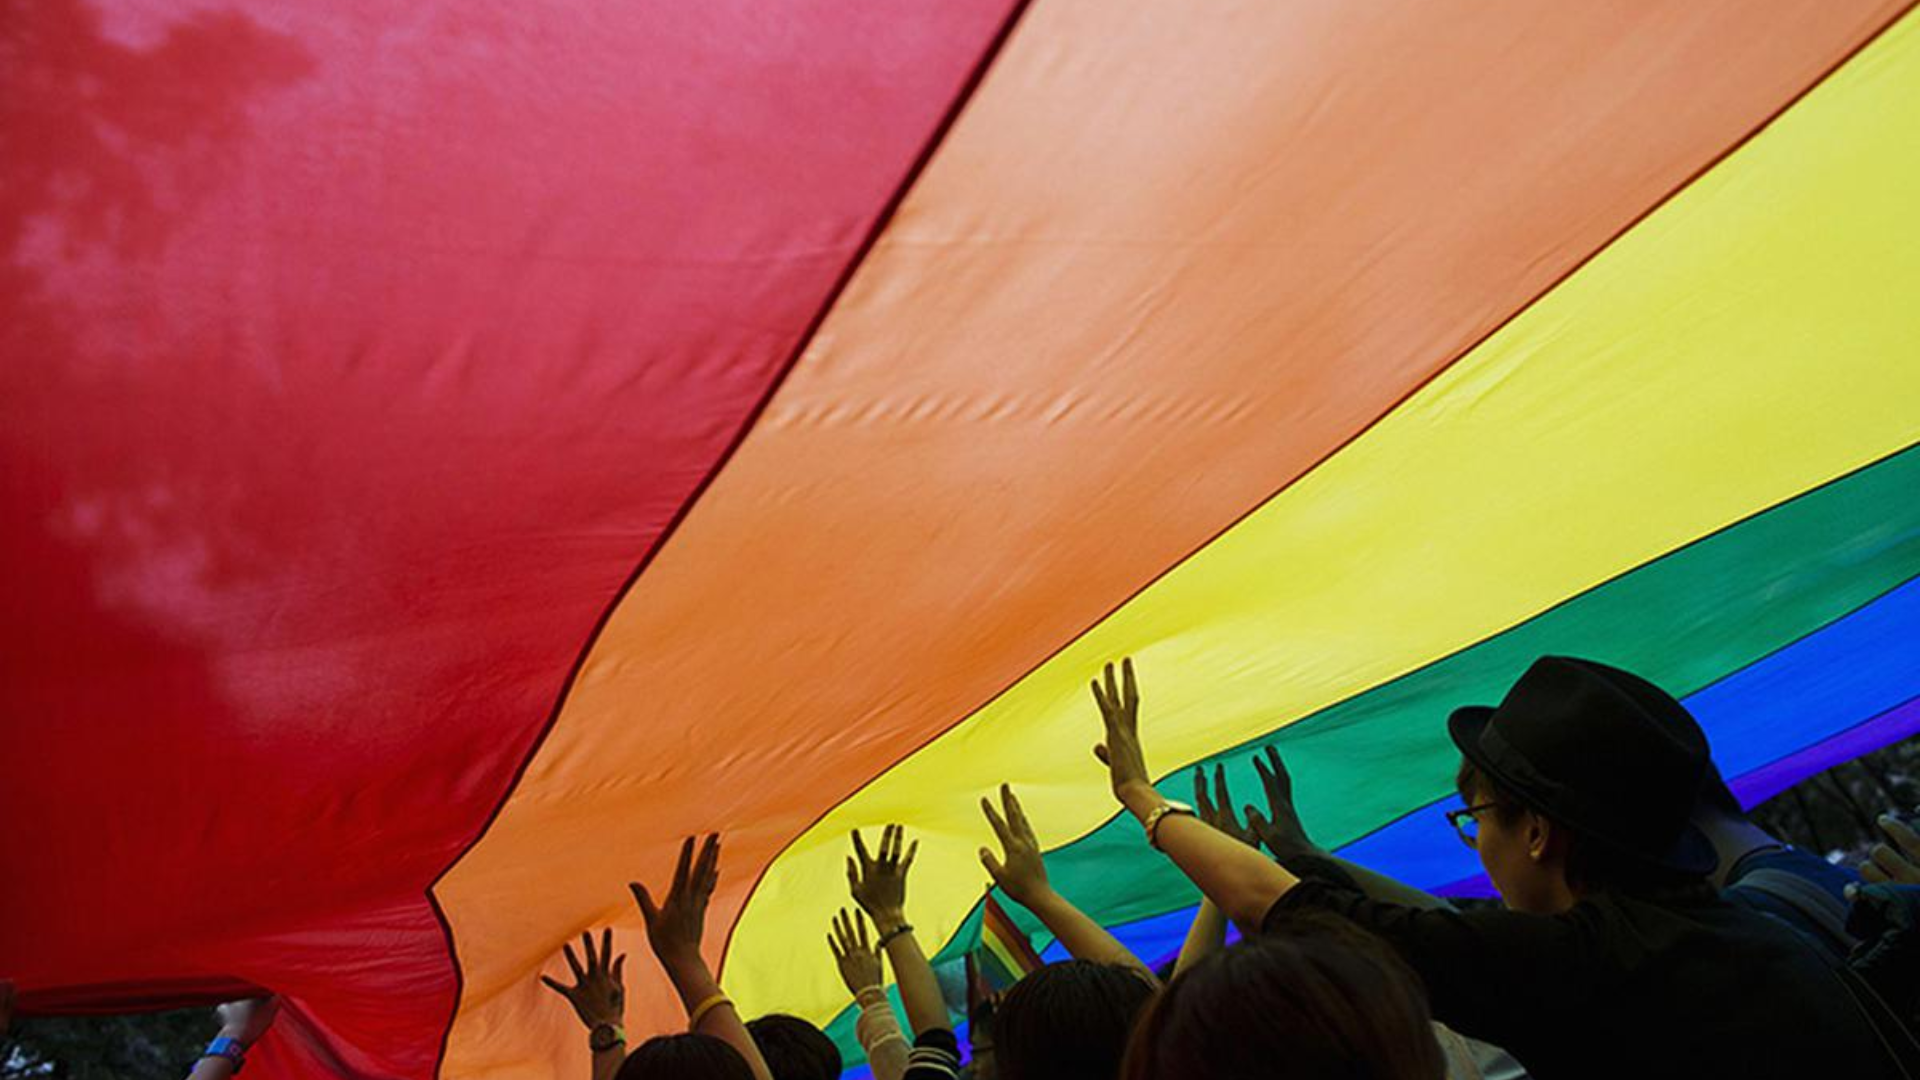 Iraq criminalises same-sex relationships,15 years in prison